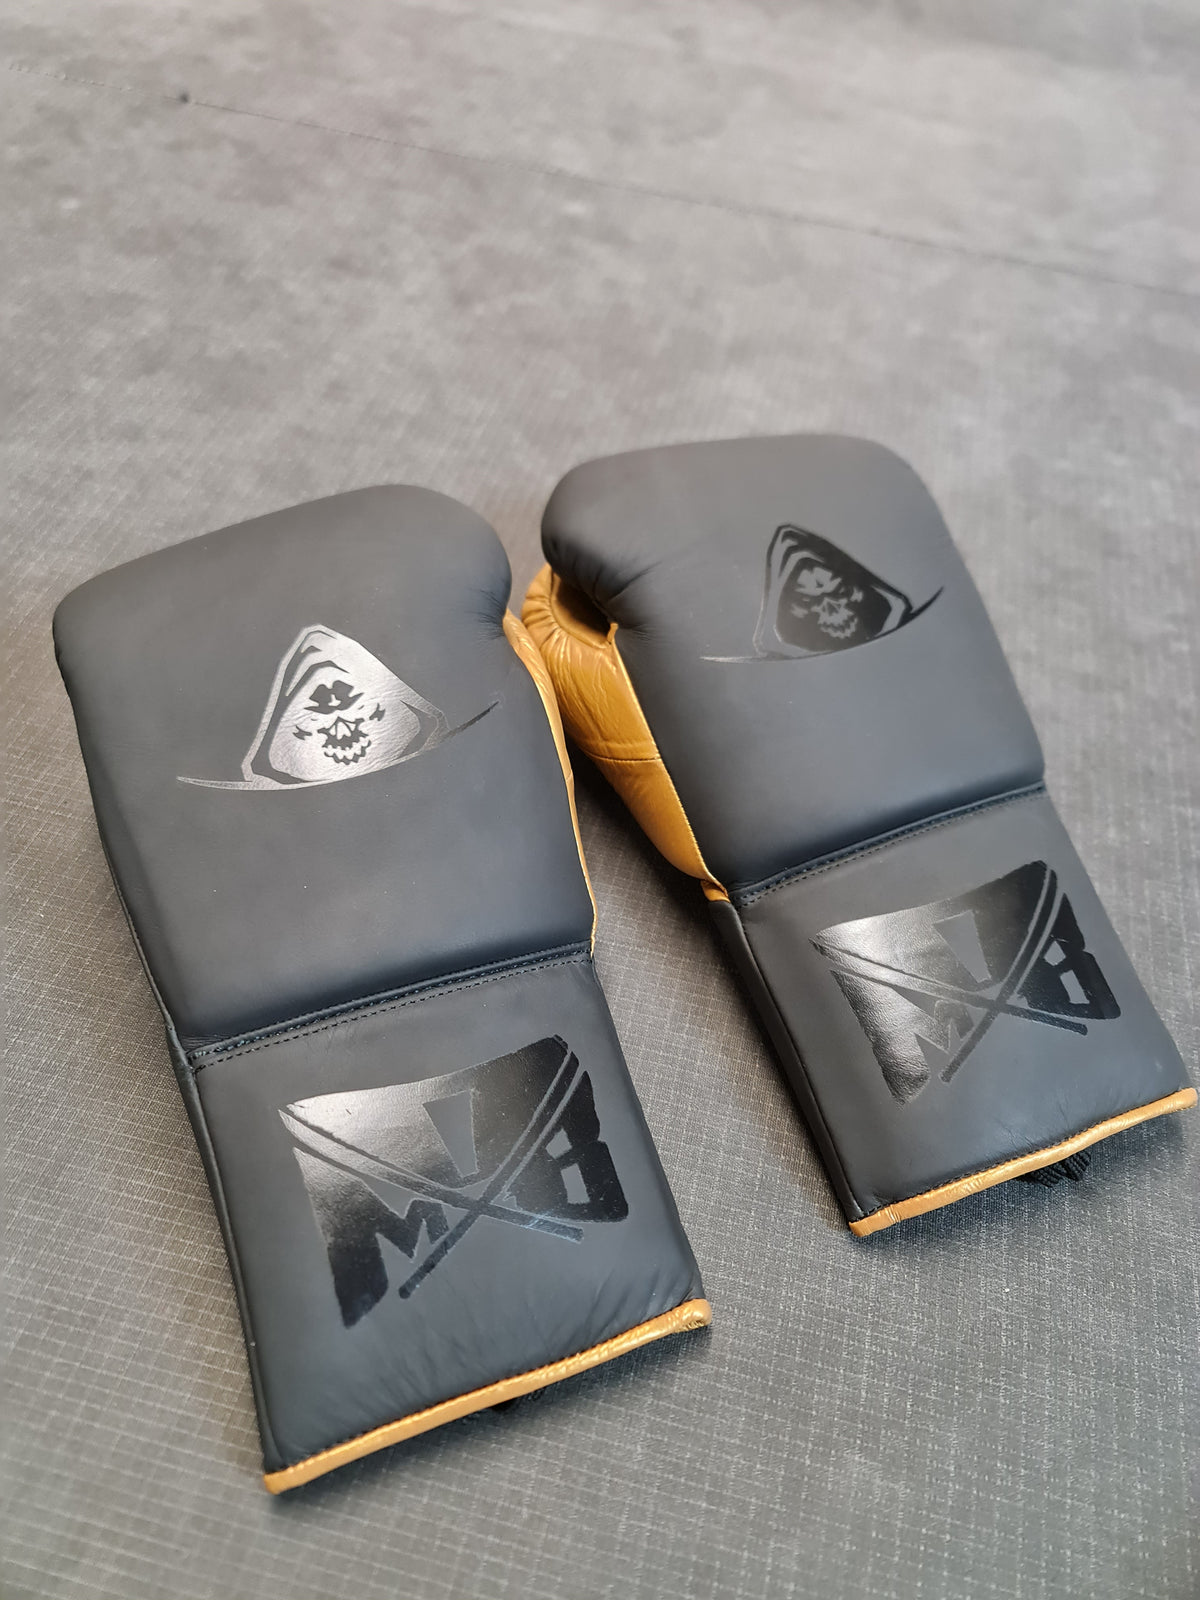 Custom Clynchmob SS Pro Boxing Glove